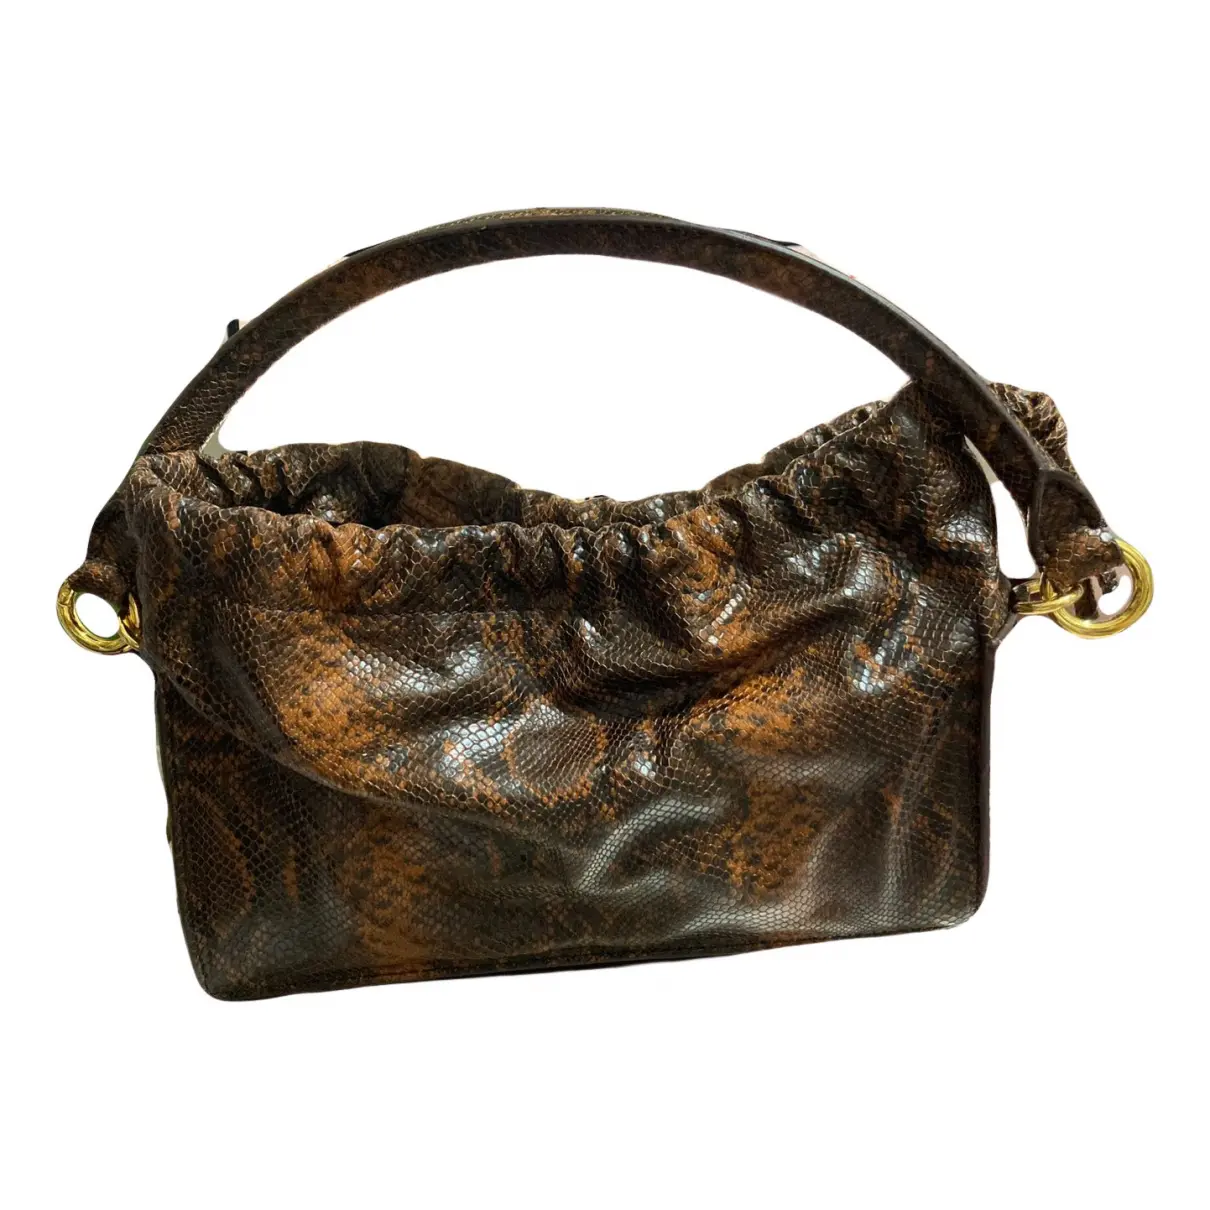 Leather handbag Yuzefi